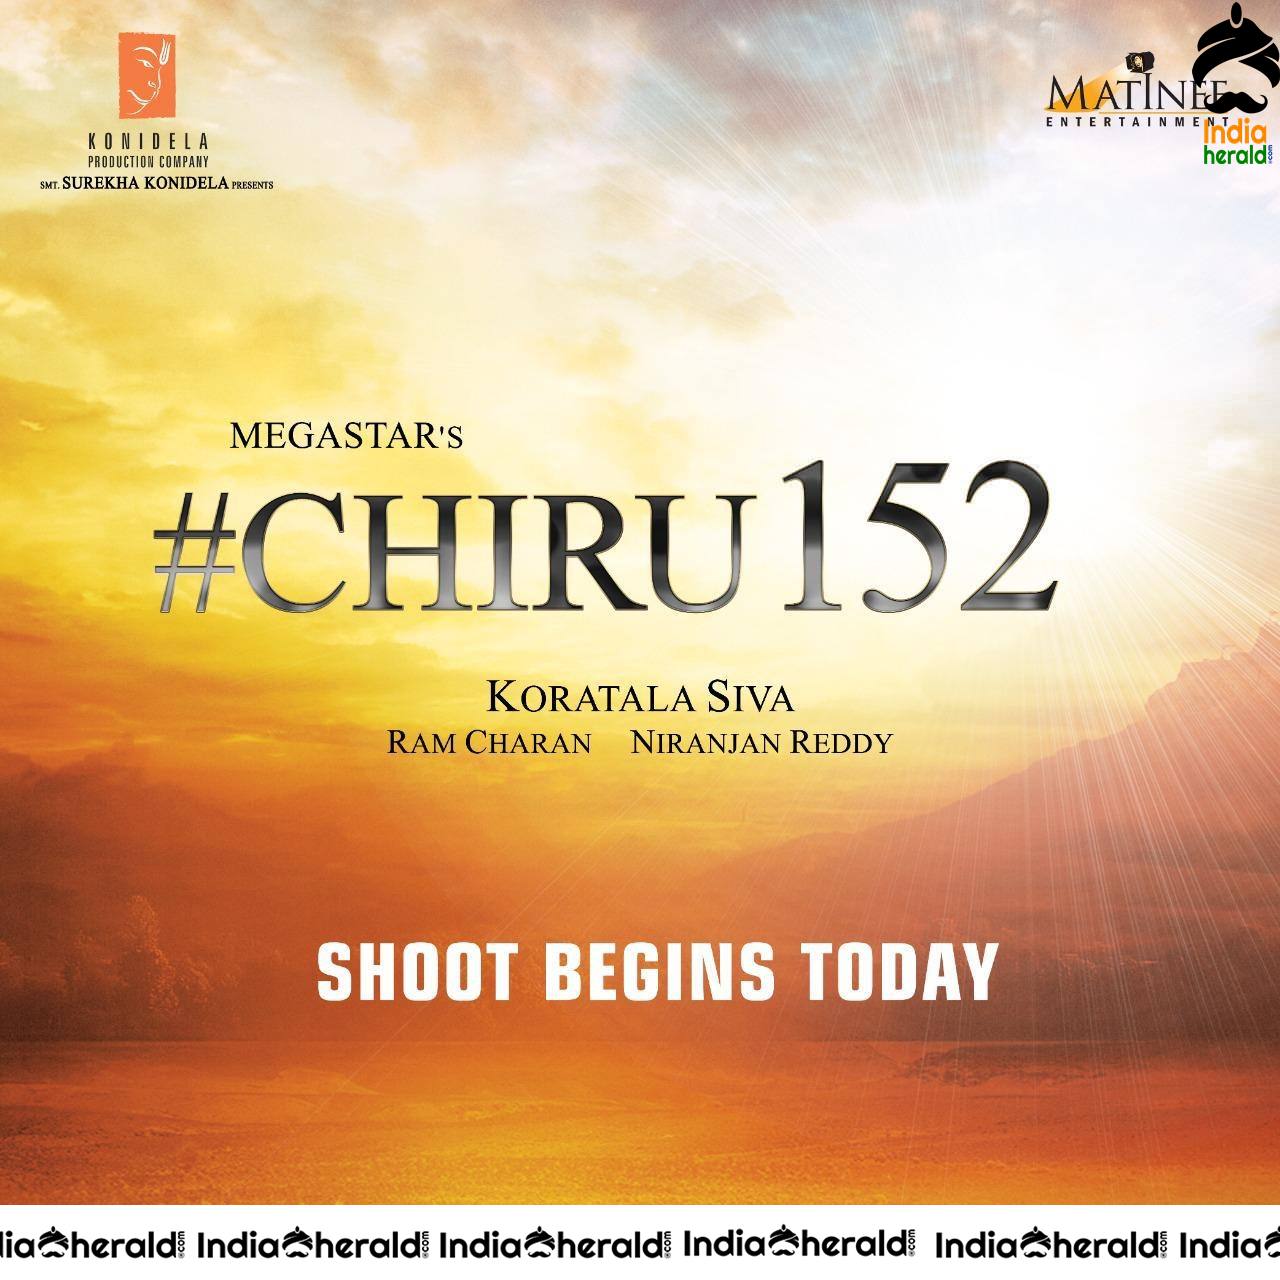 Chiru152 Shoot Begins Today